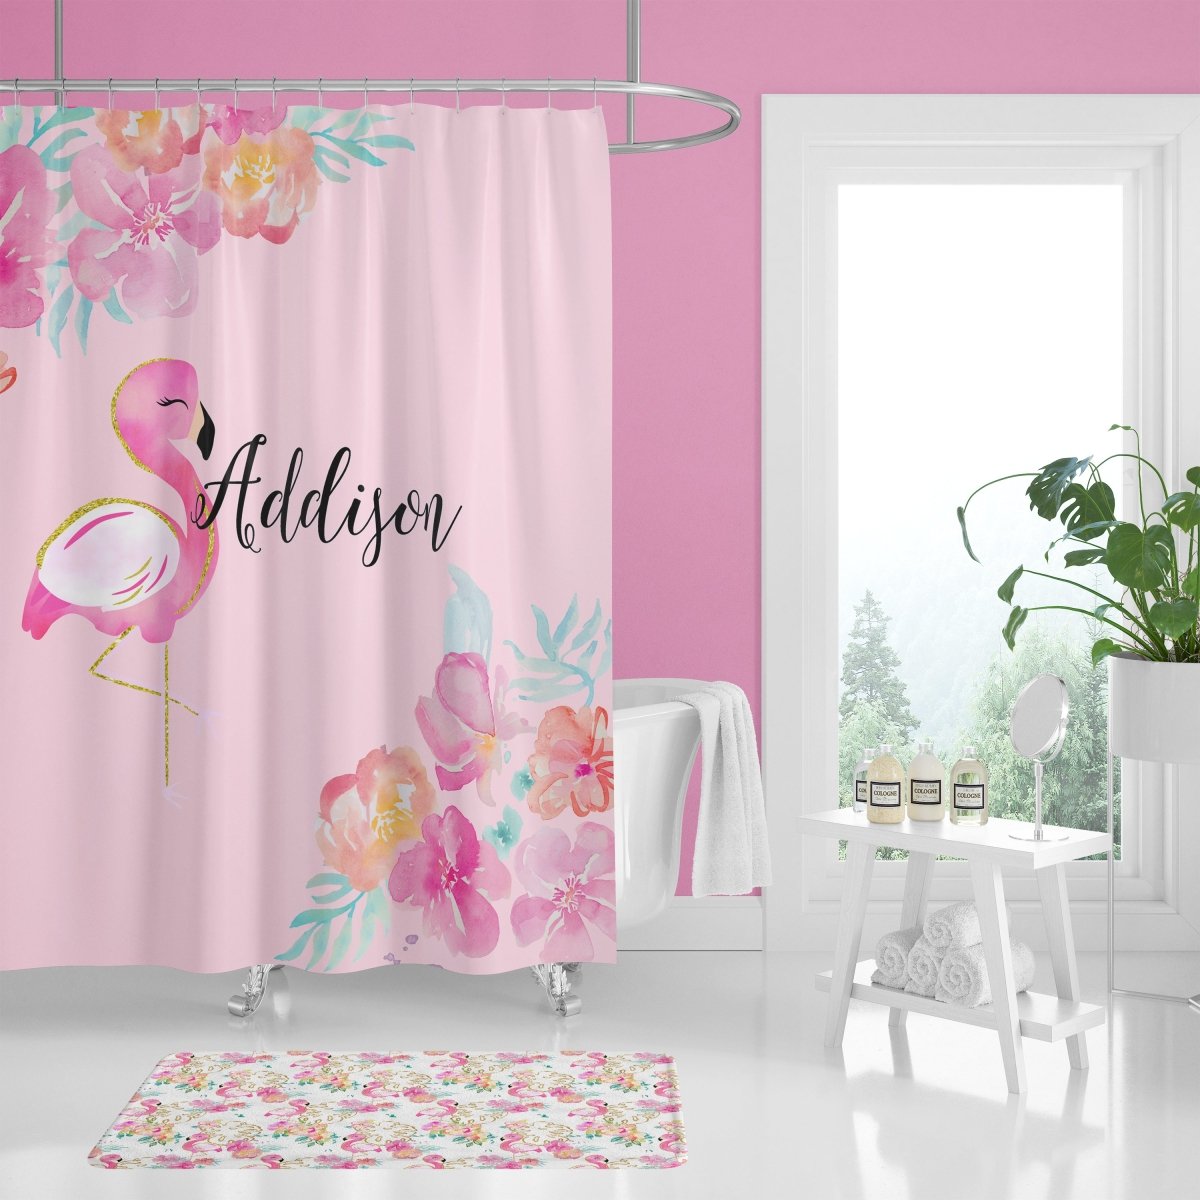 Tropical Flamingo Bathroom Collection - gender_girl, Theme_Tropical, Tropical Flamingo